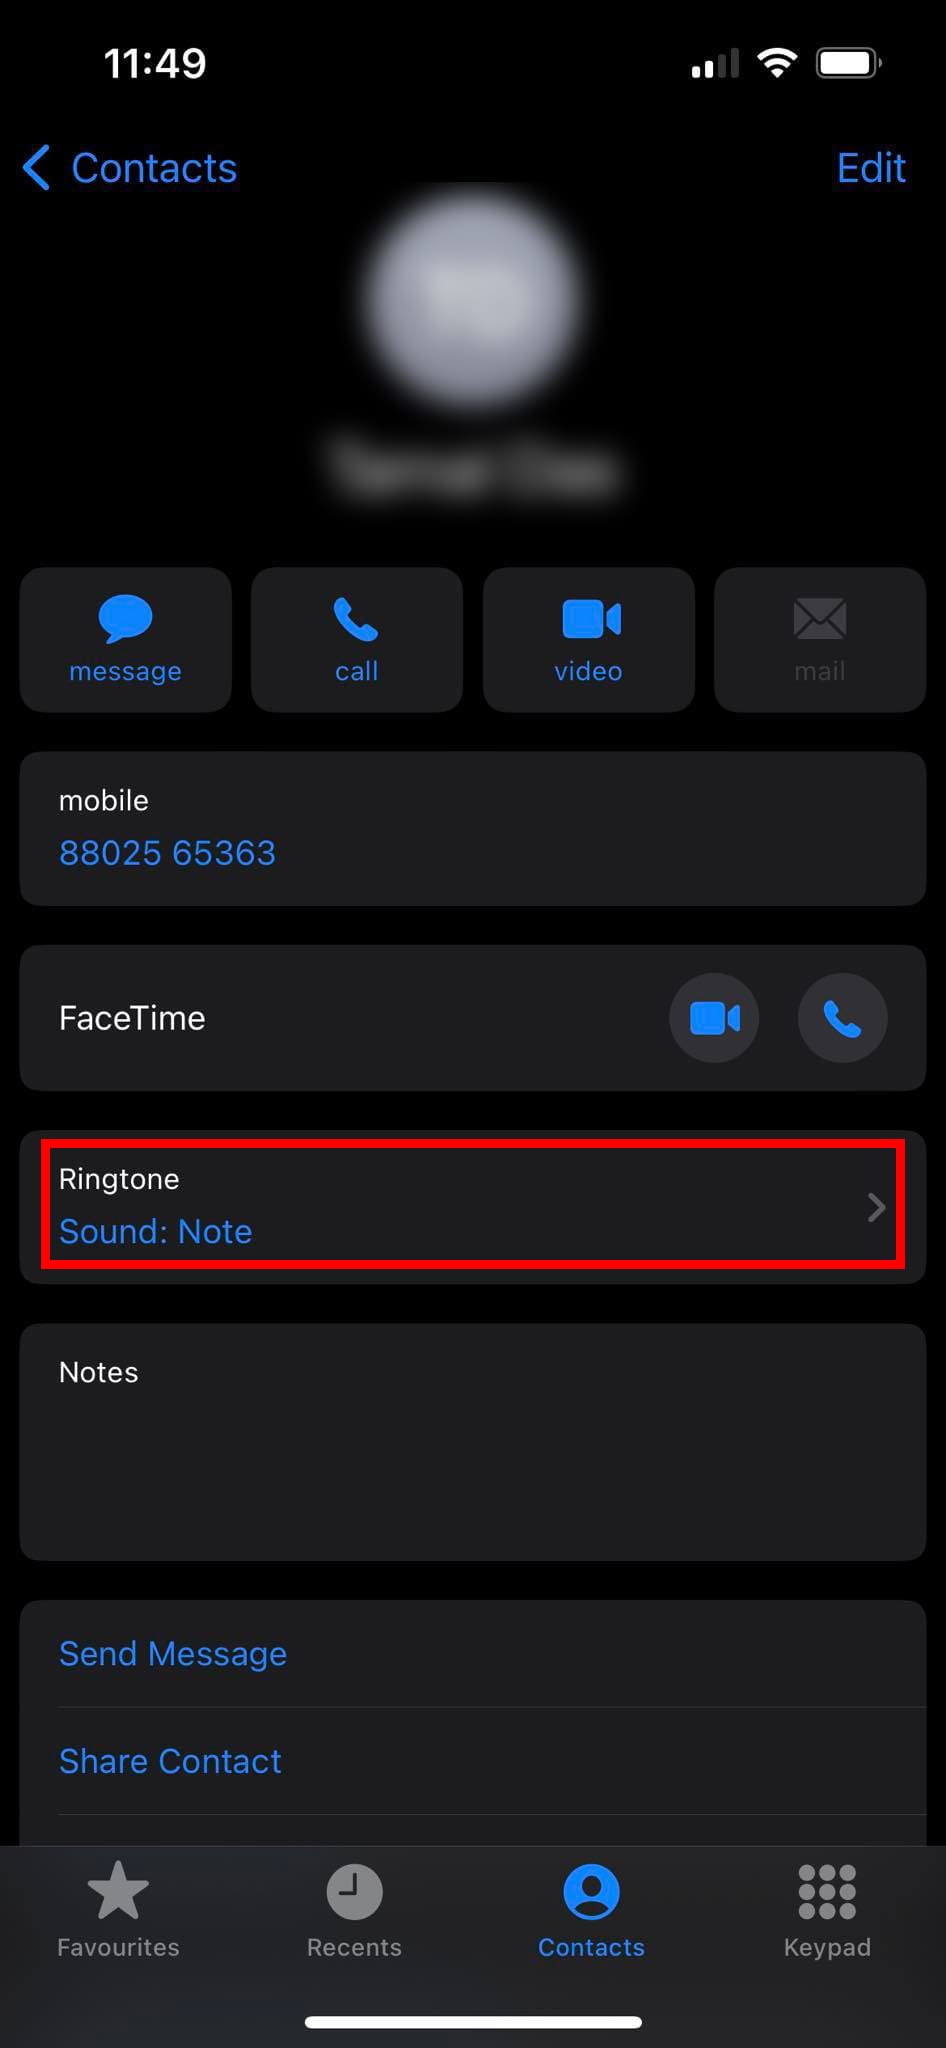 How to set up a custom ringtone on iPhone